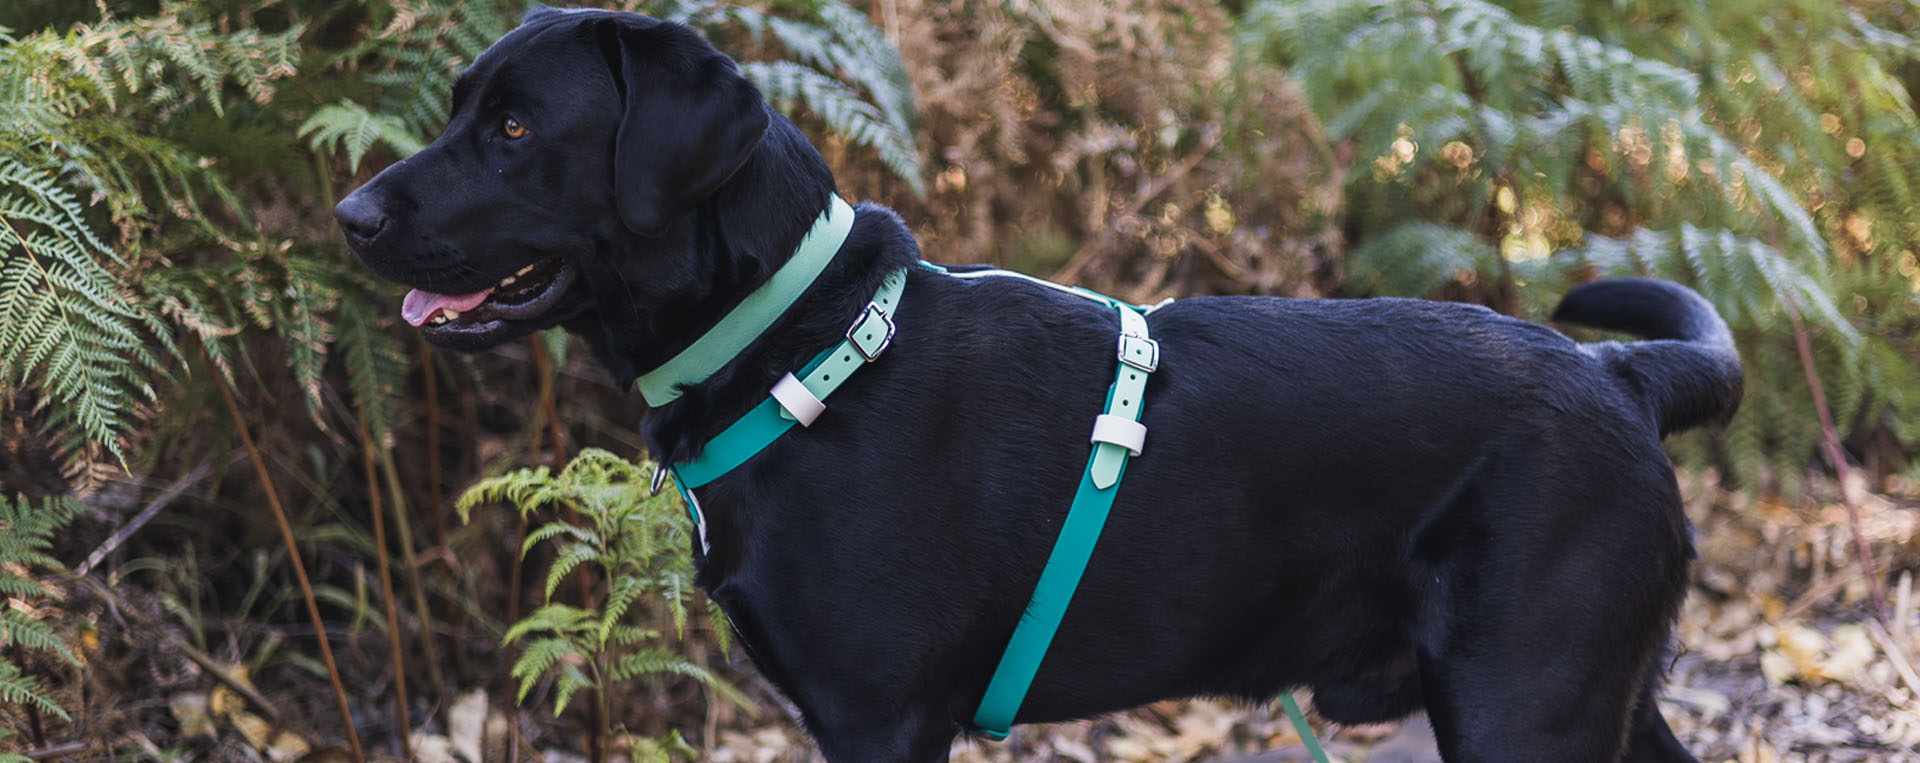 Buy Dog Collars Online Australia